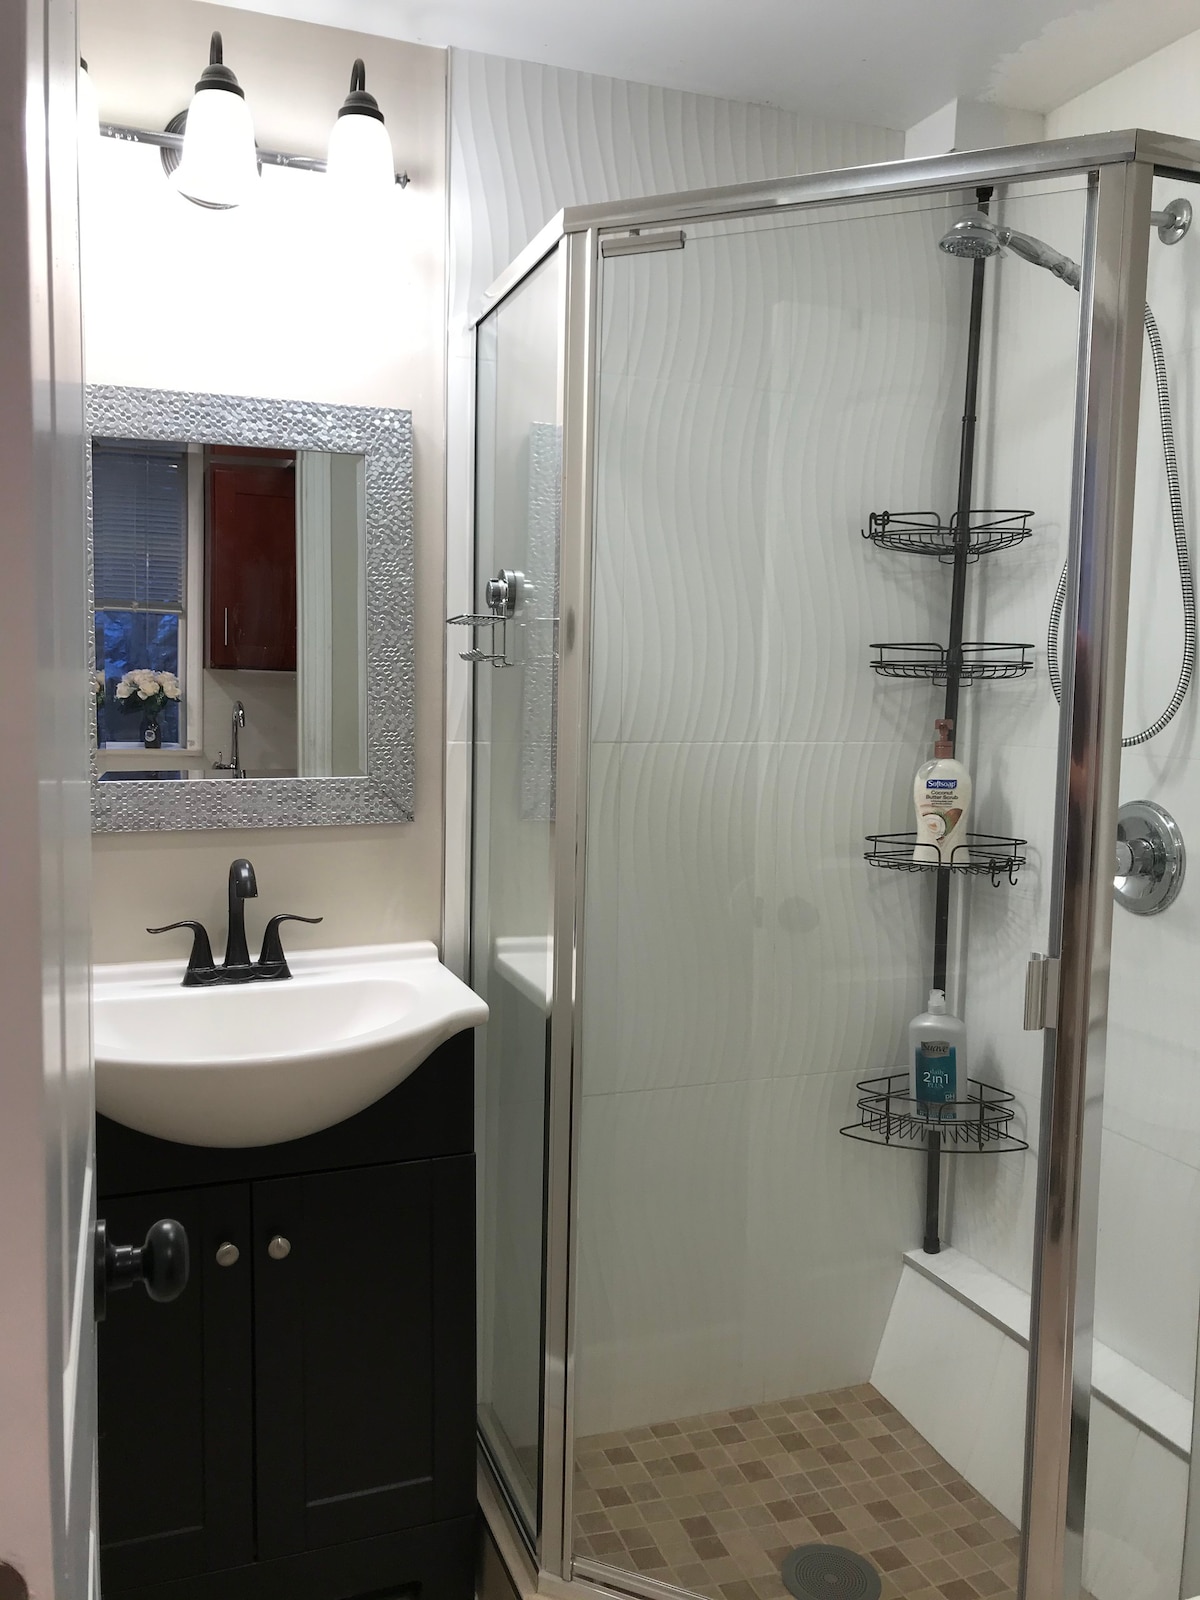 1GA-Private Room (share bath) at Marina/Cow Hollow